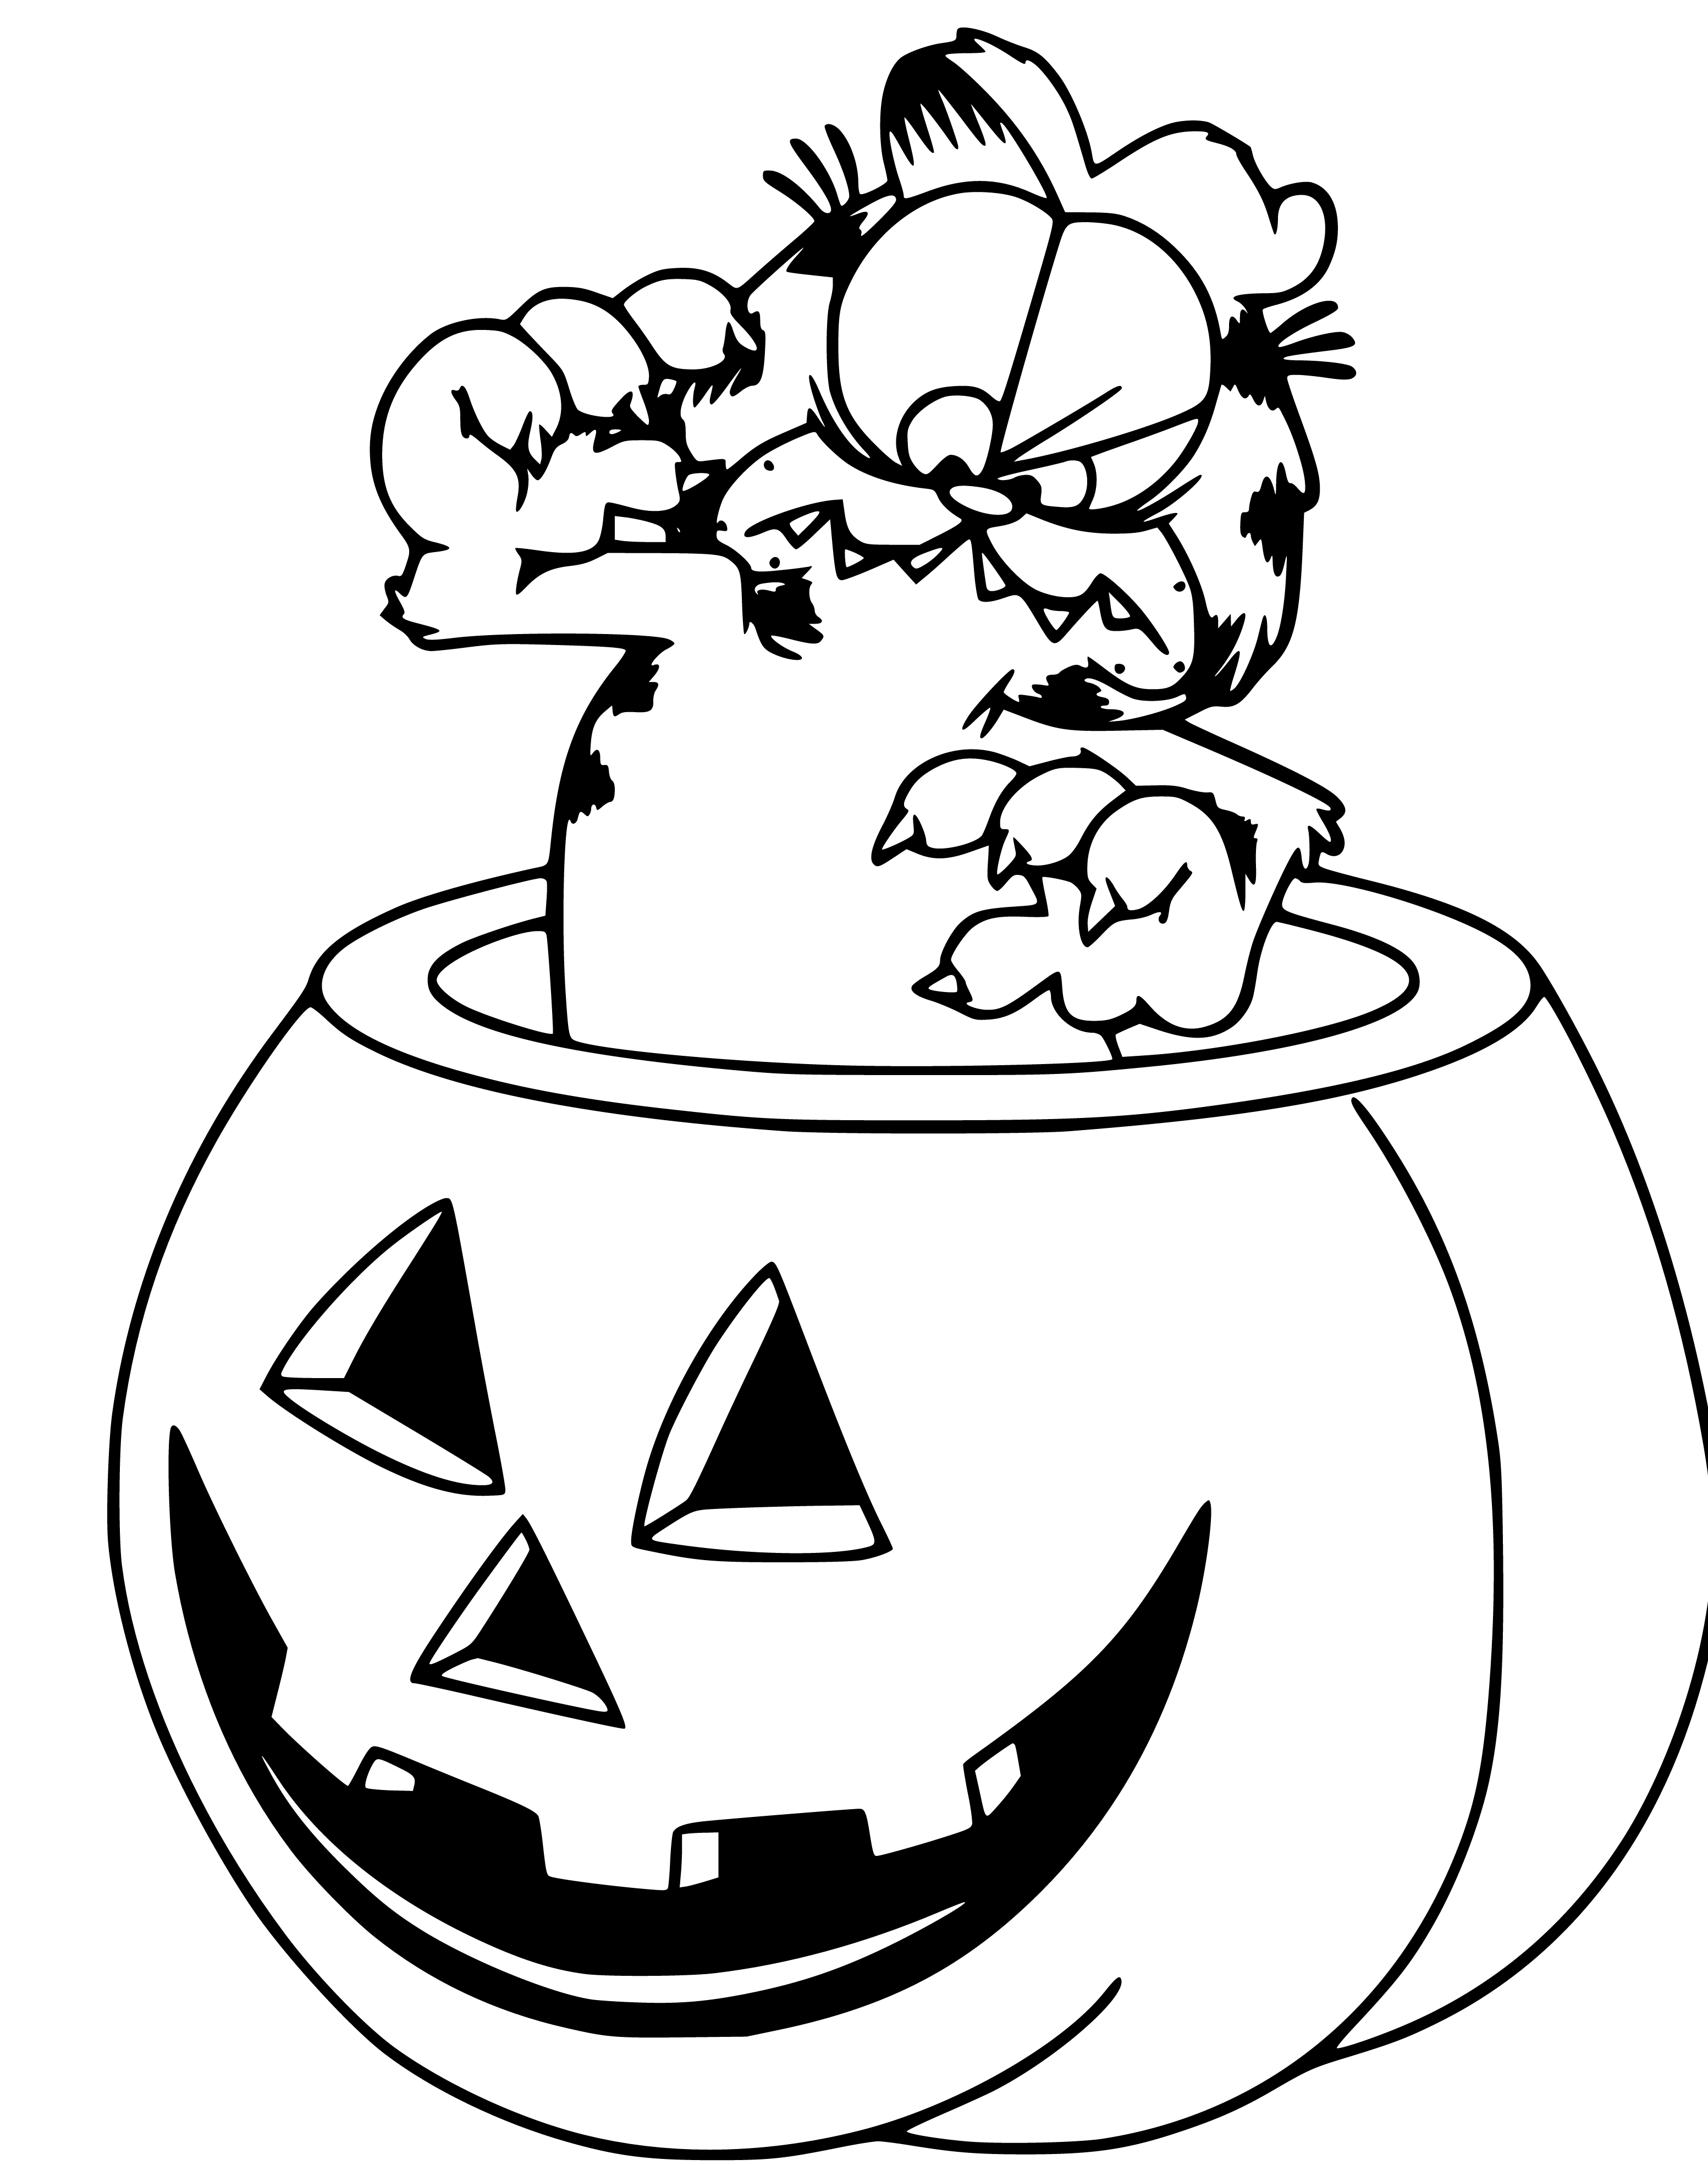 Printable Garfield Halloween Pumpkin Coloring Page for kids.